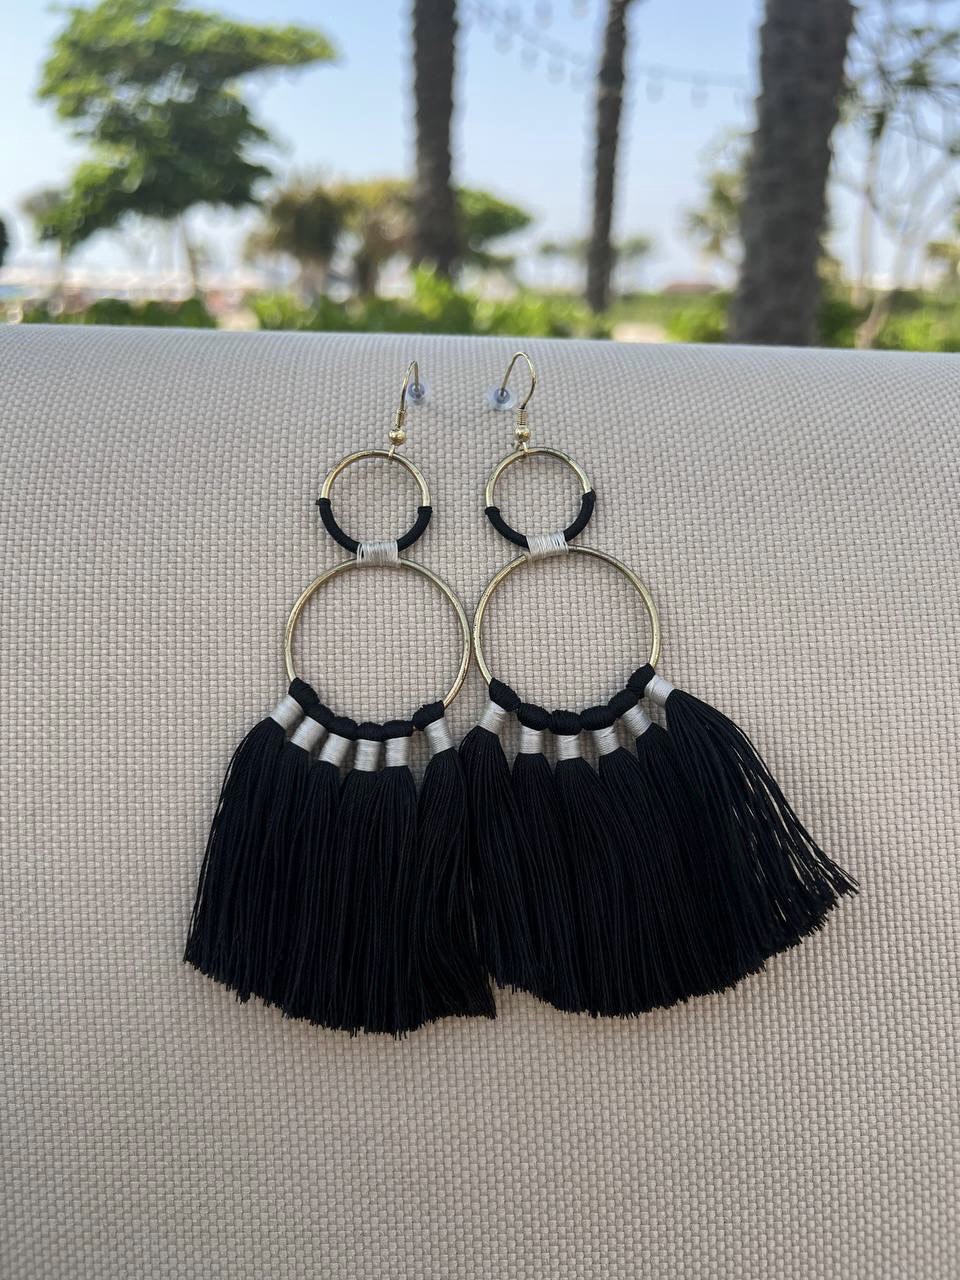 Atelier DXB - Handmade black earrings